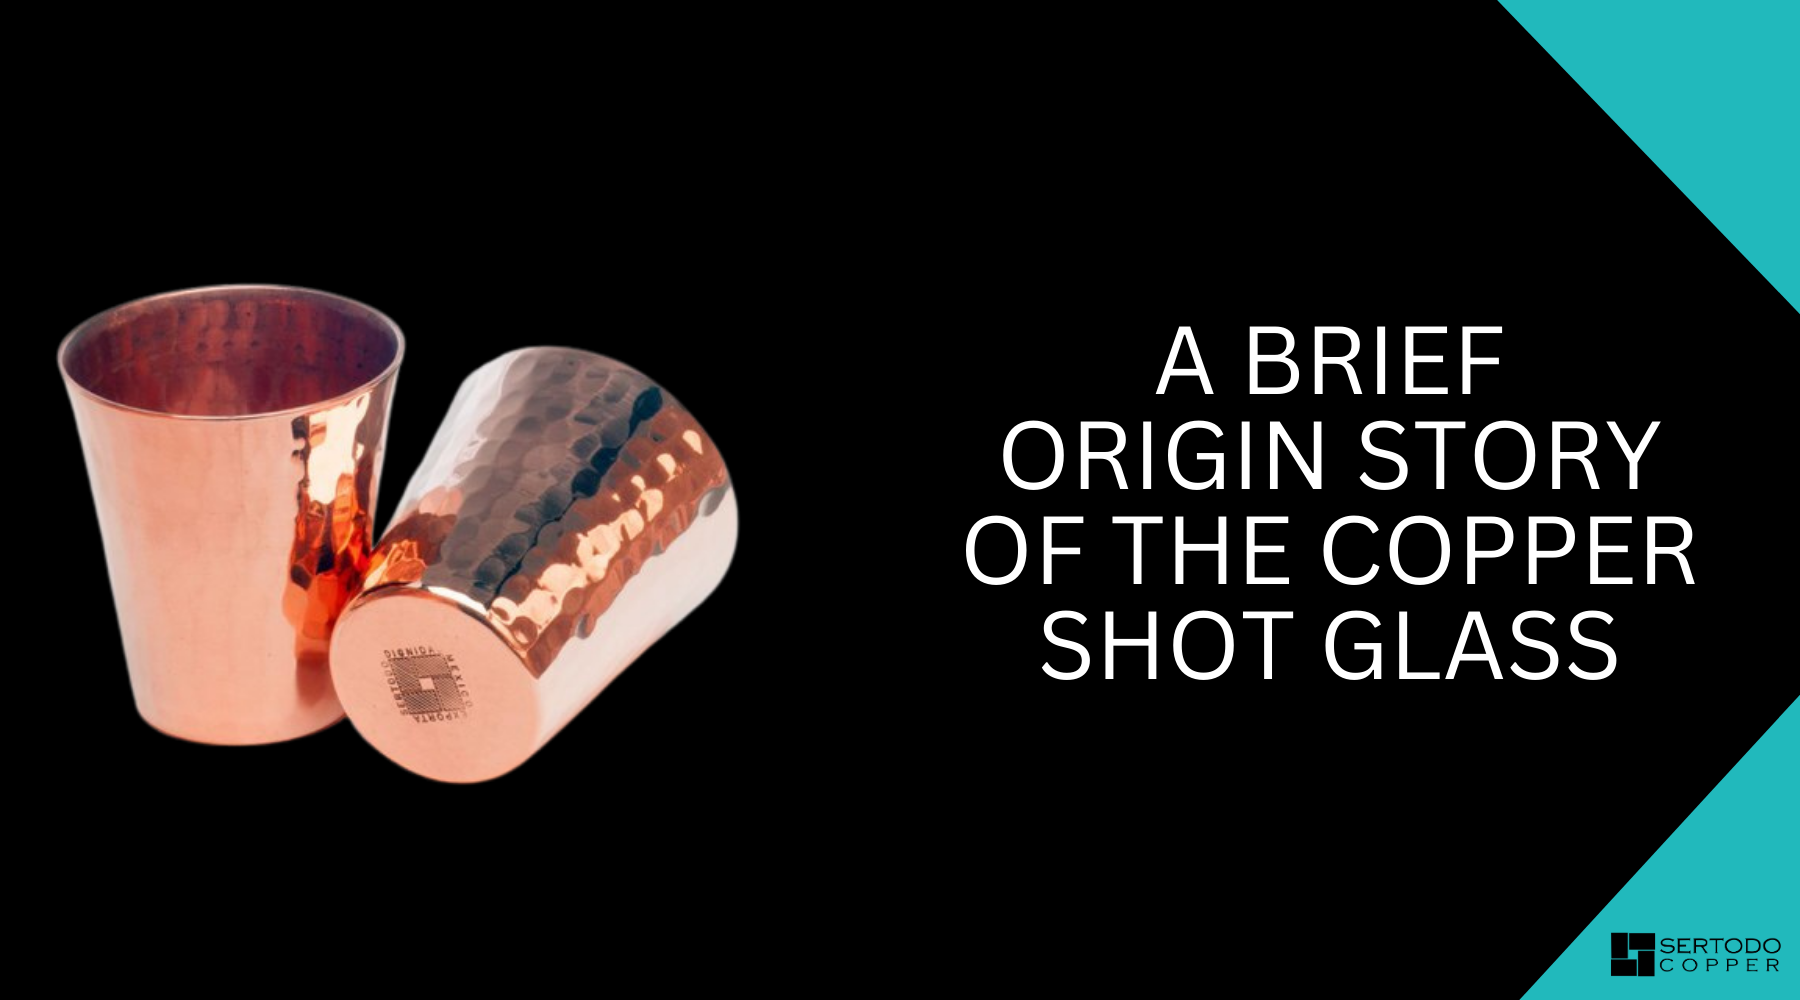 Origins of the copper shot glass